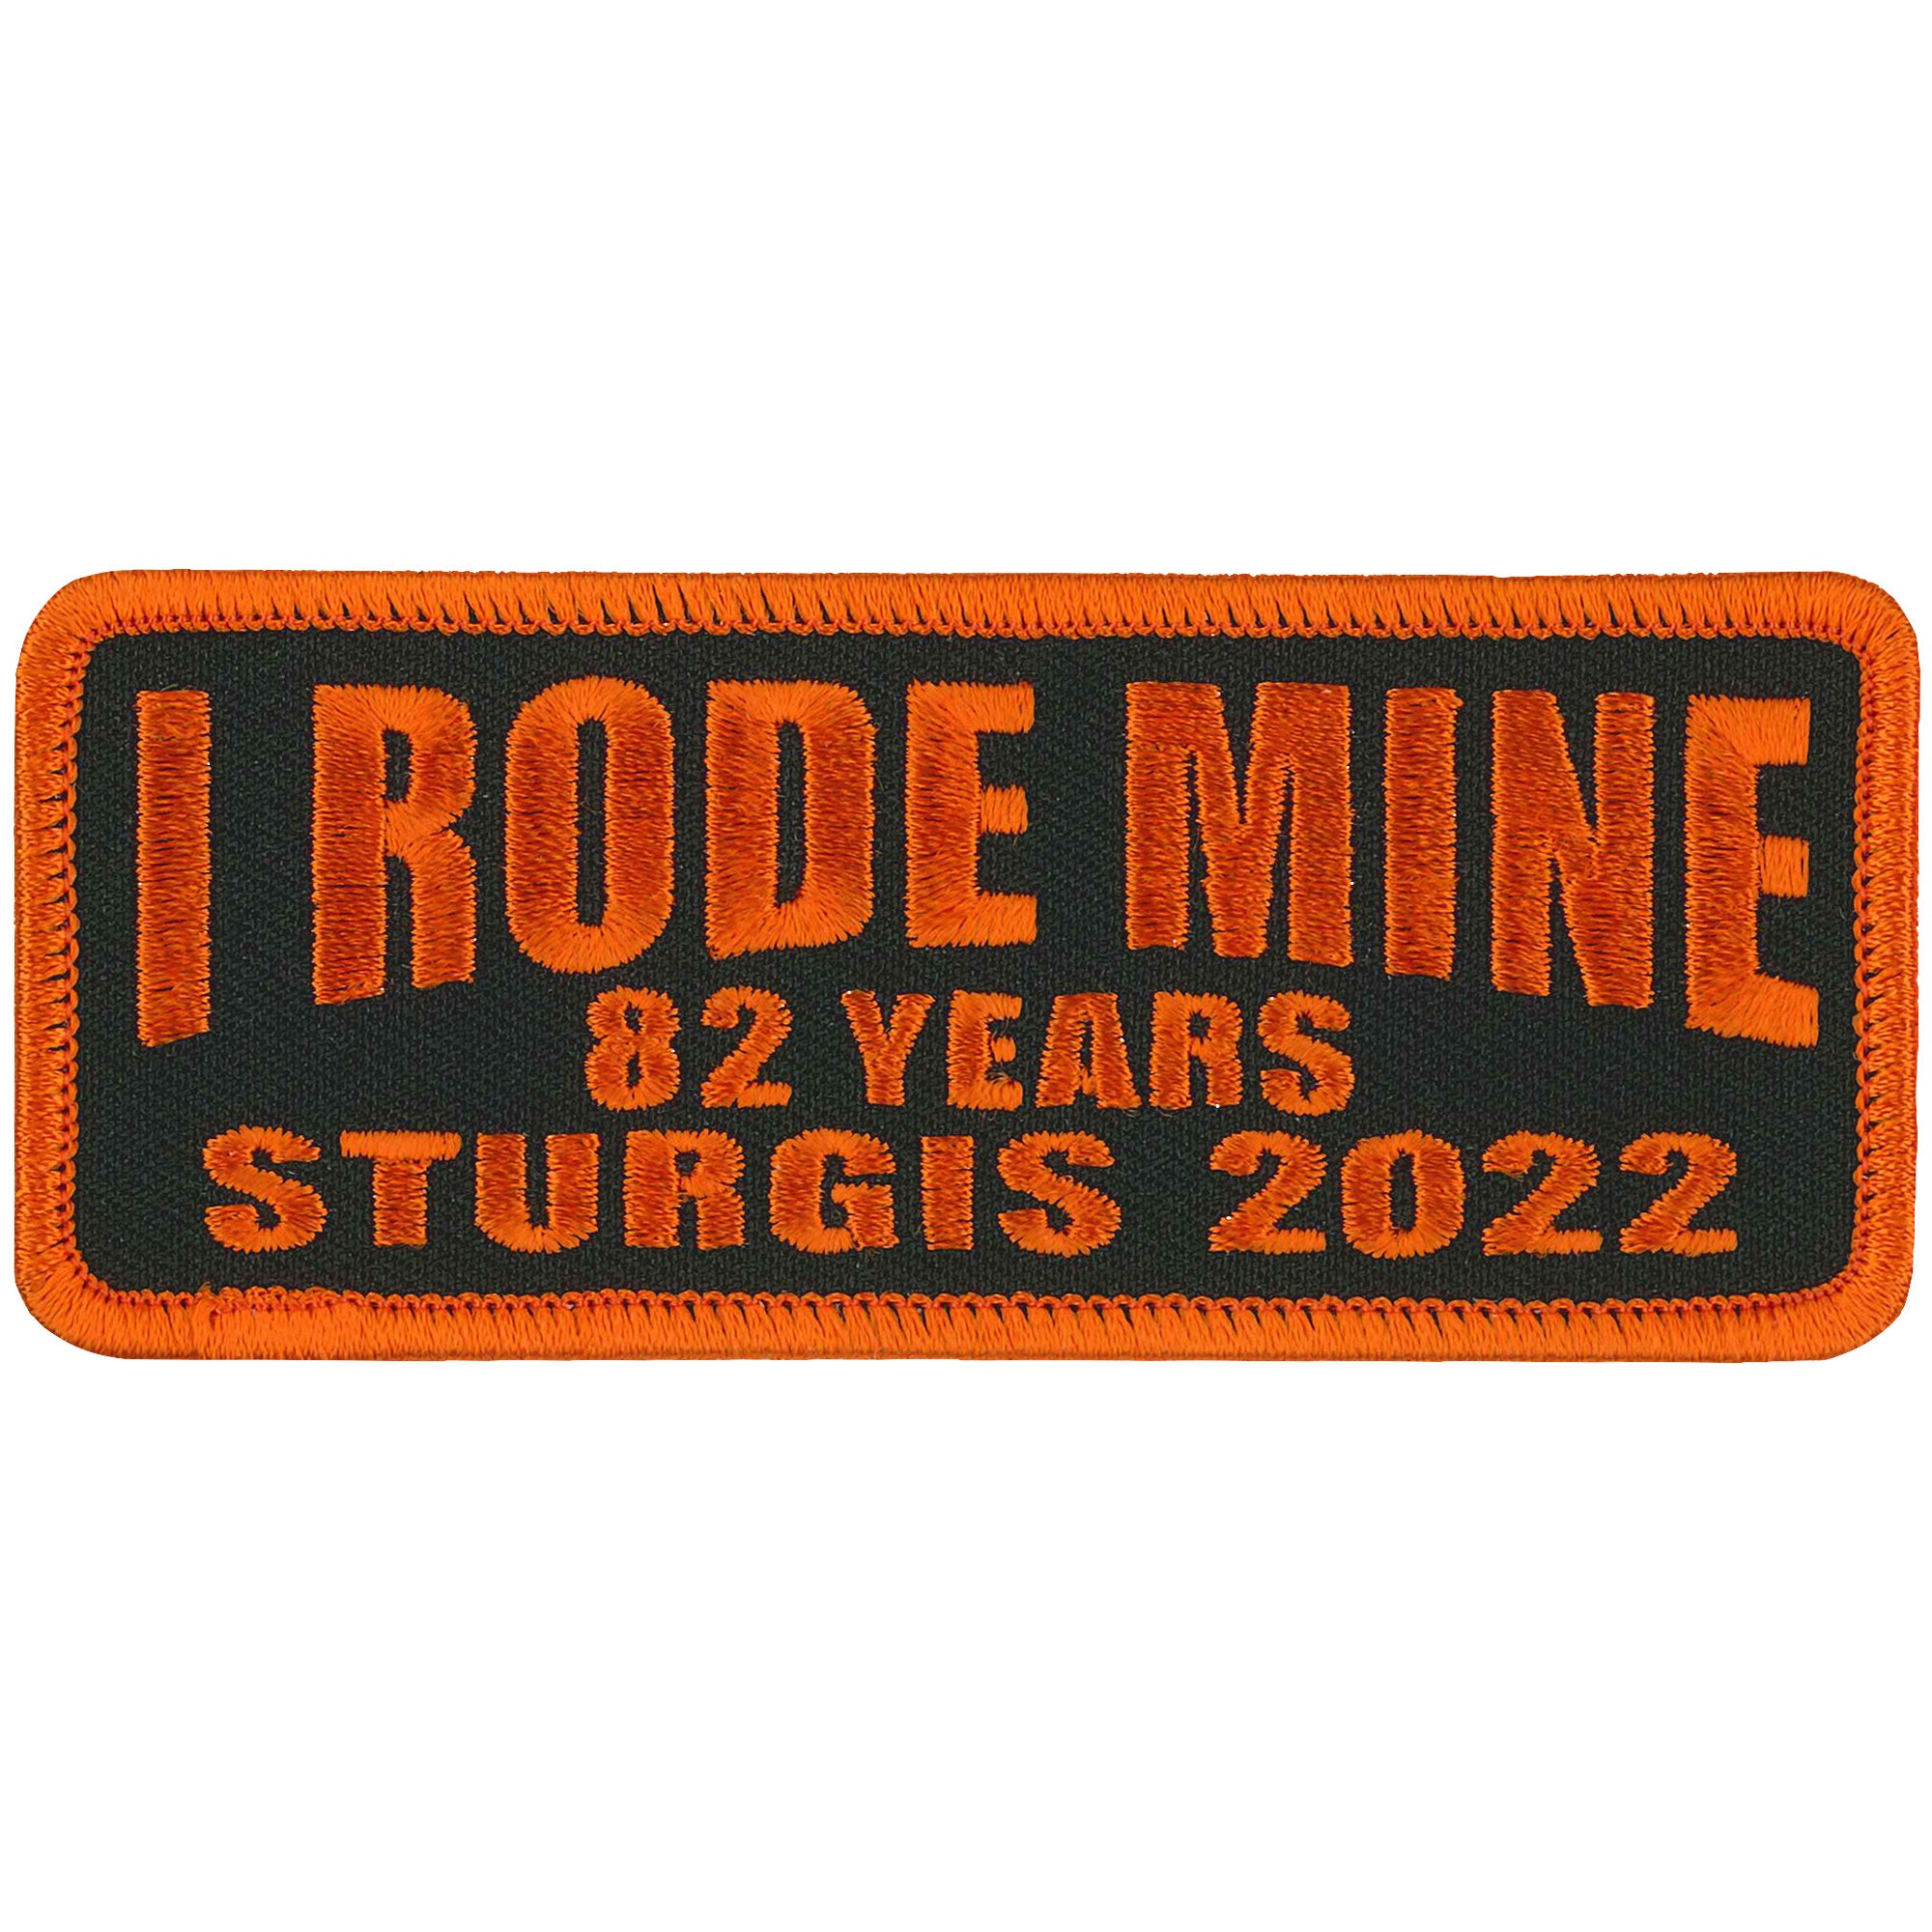 2022 Sturgis Motorcycle Rally I Rode Mine Orange Patch